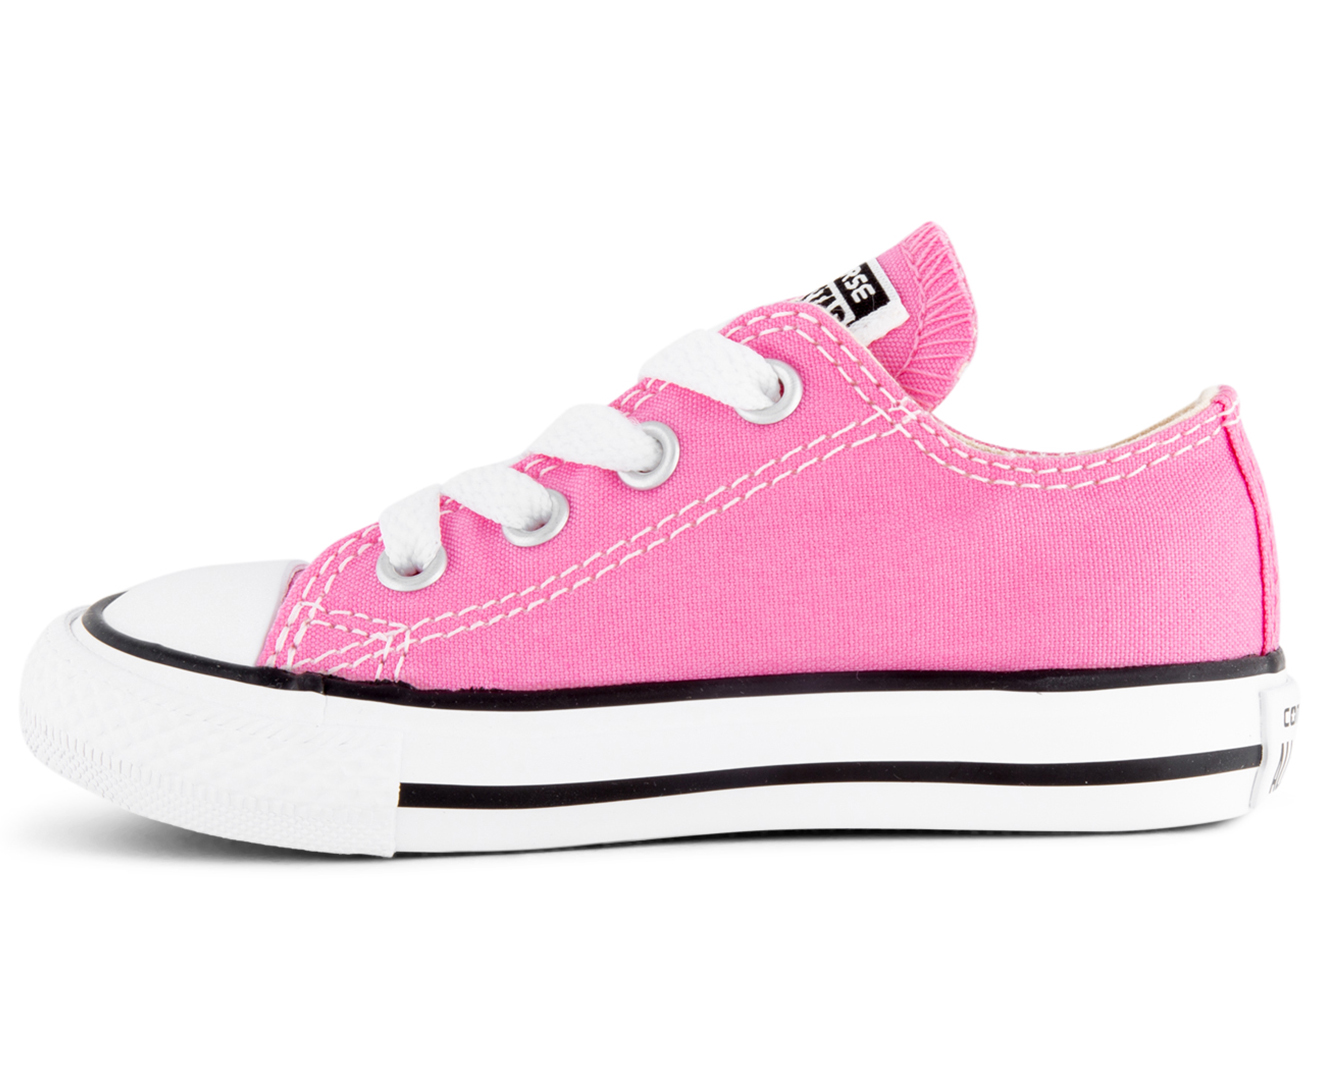 Converse Toddler Chuck Taylor All Star Shoe - Pink | Catch.com.au